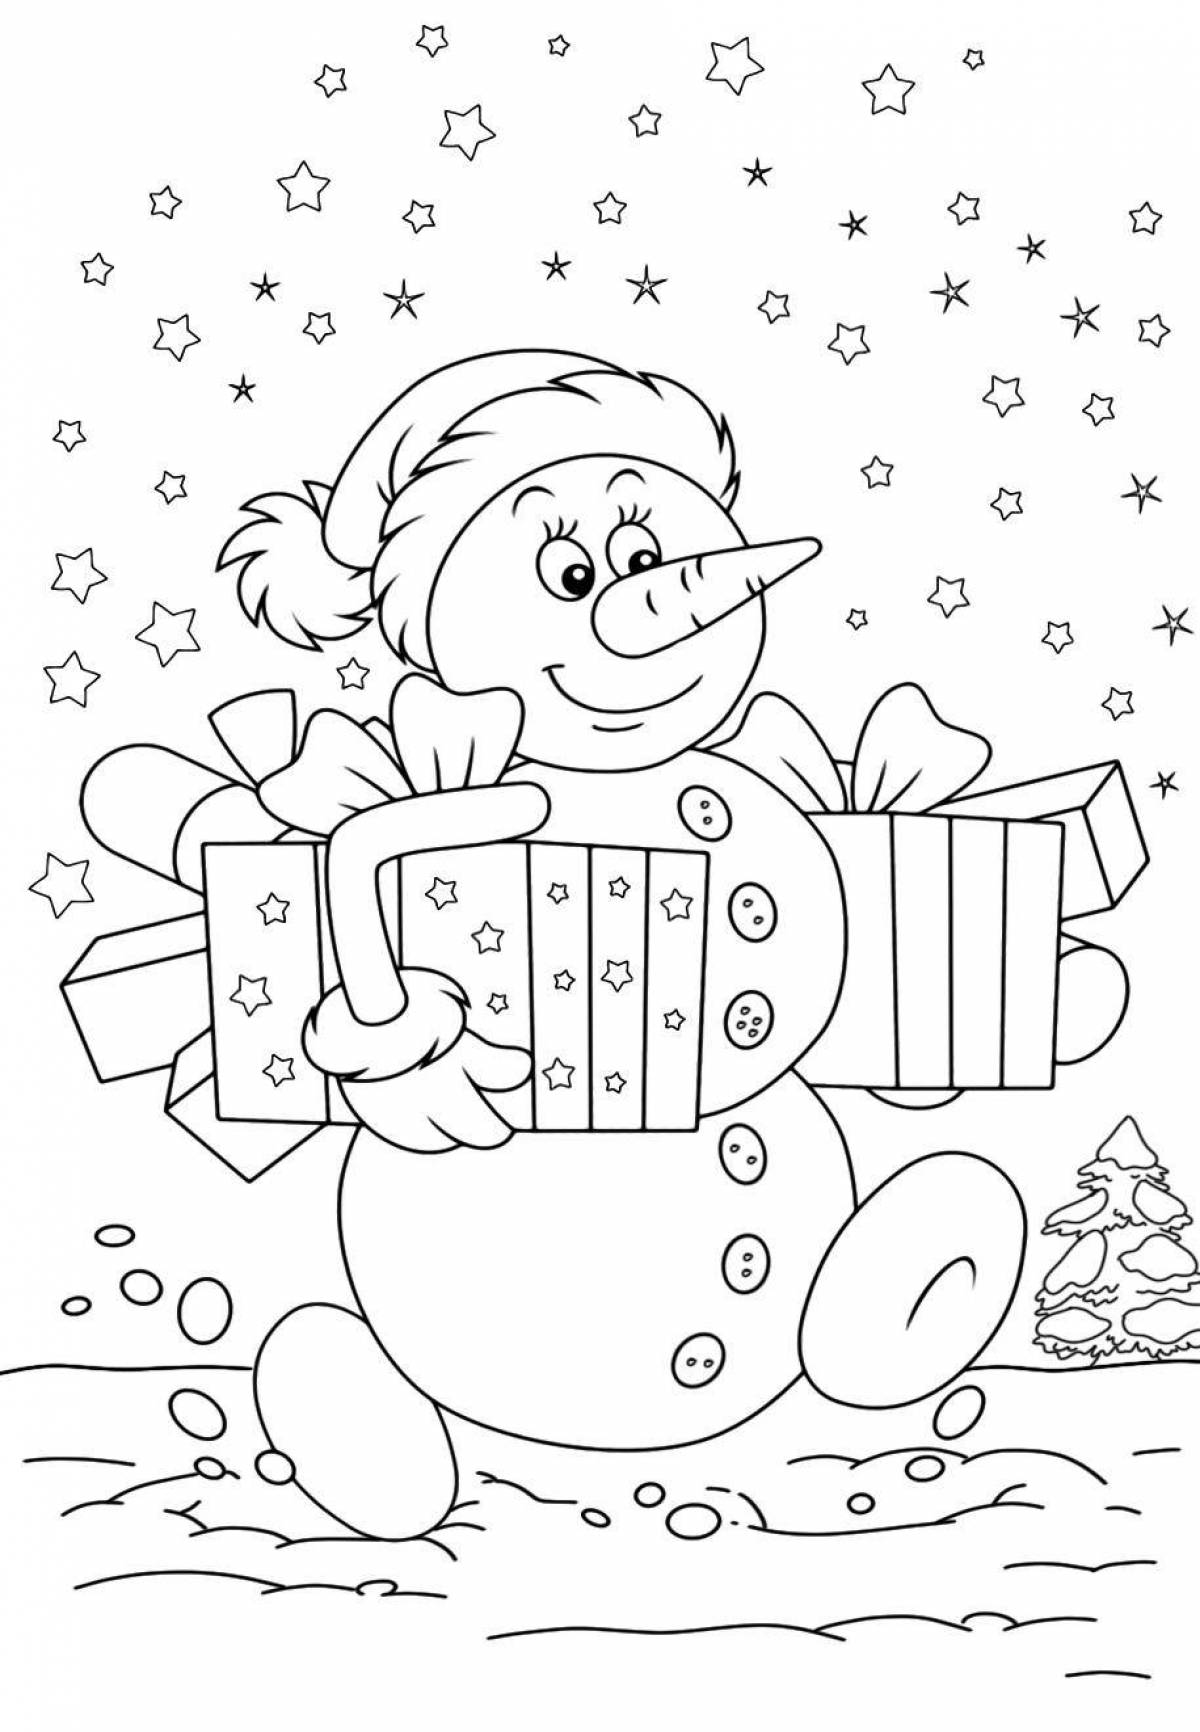 Glamorous Christmas snowman coloring page